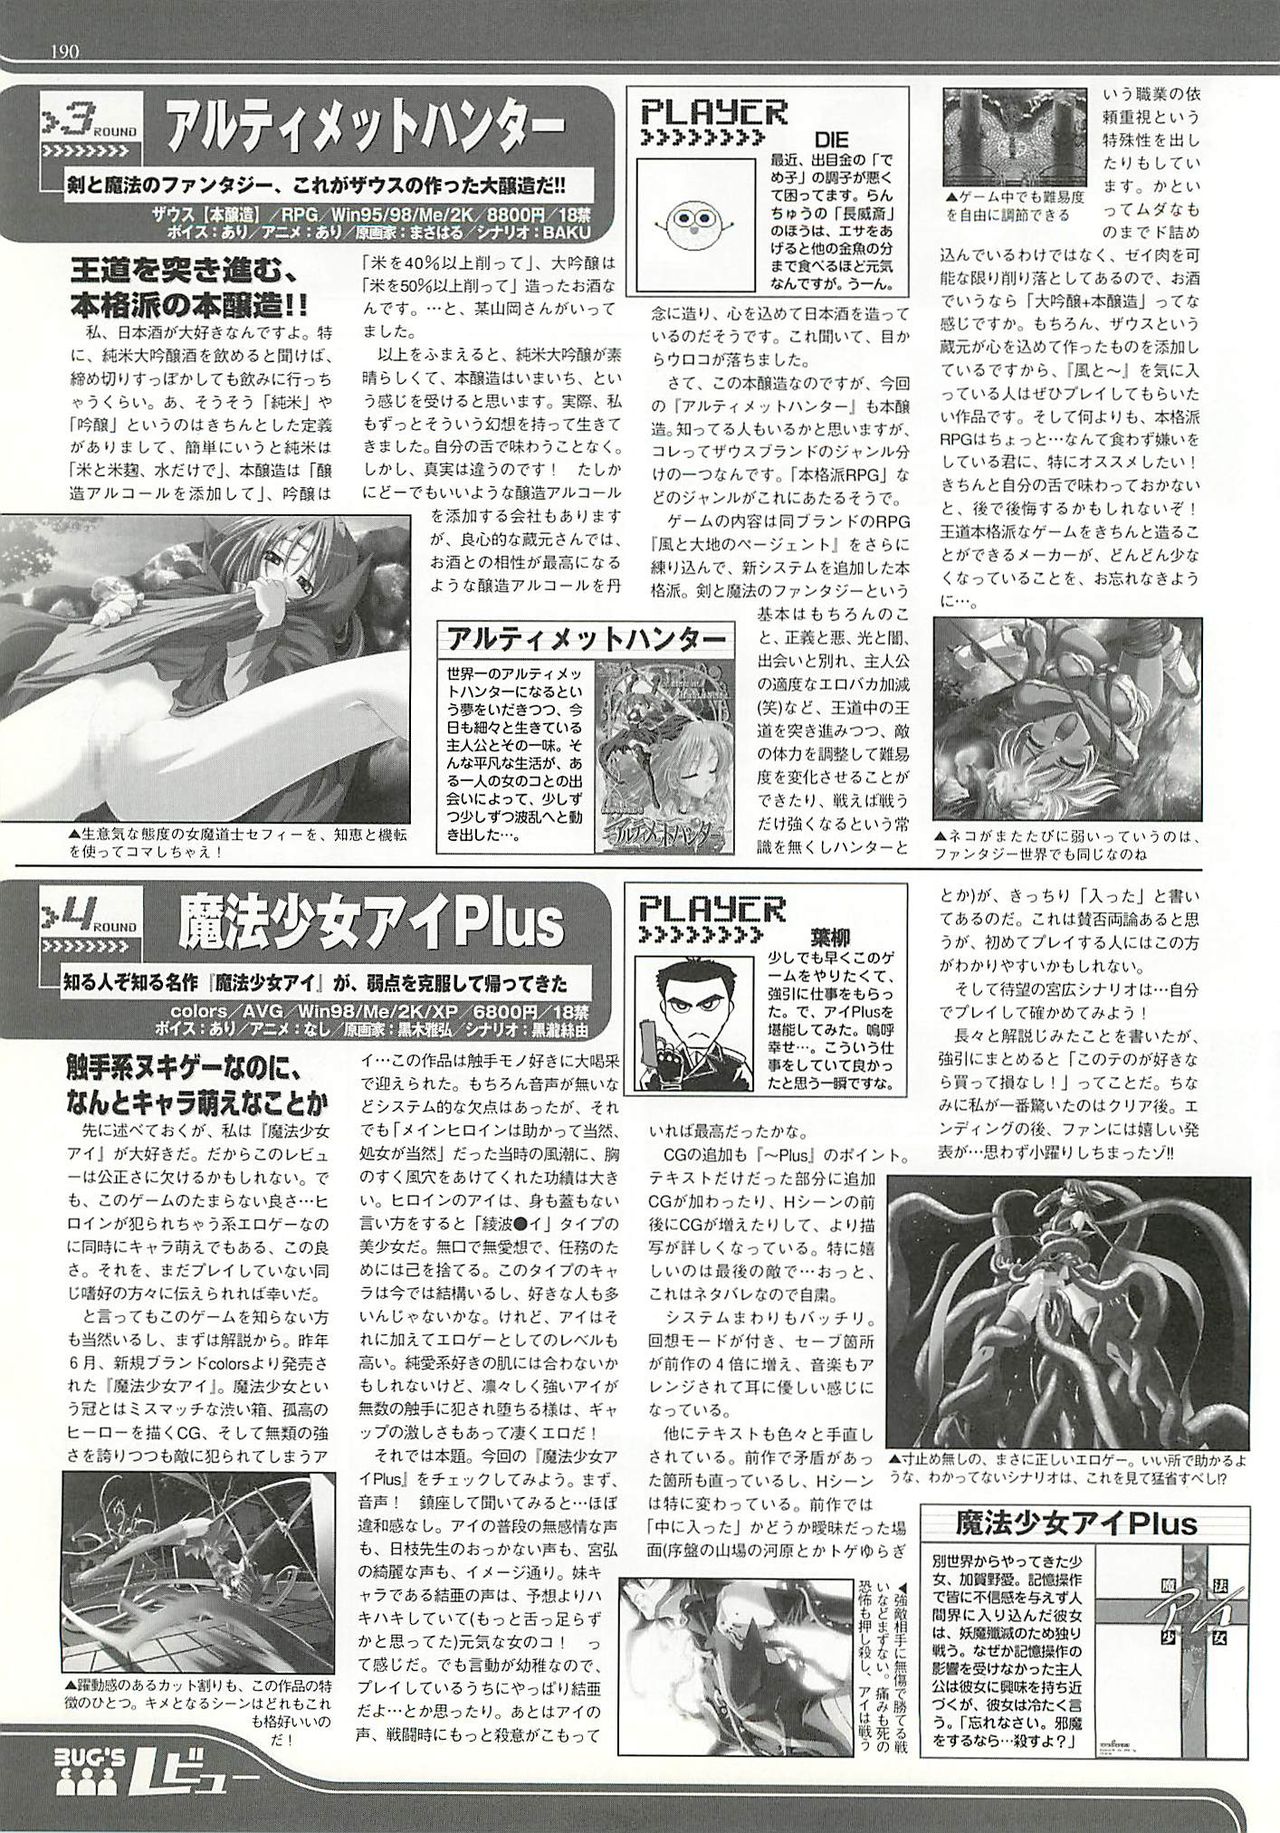 BugBug 2002年4月号